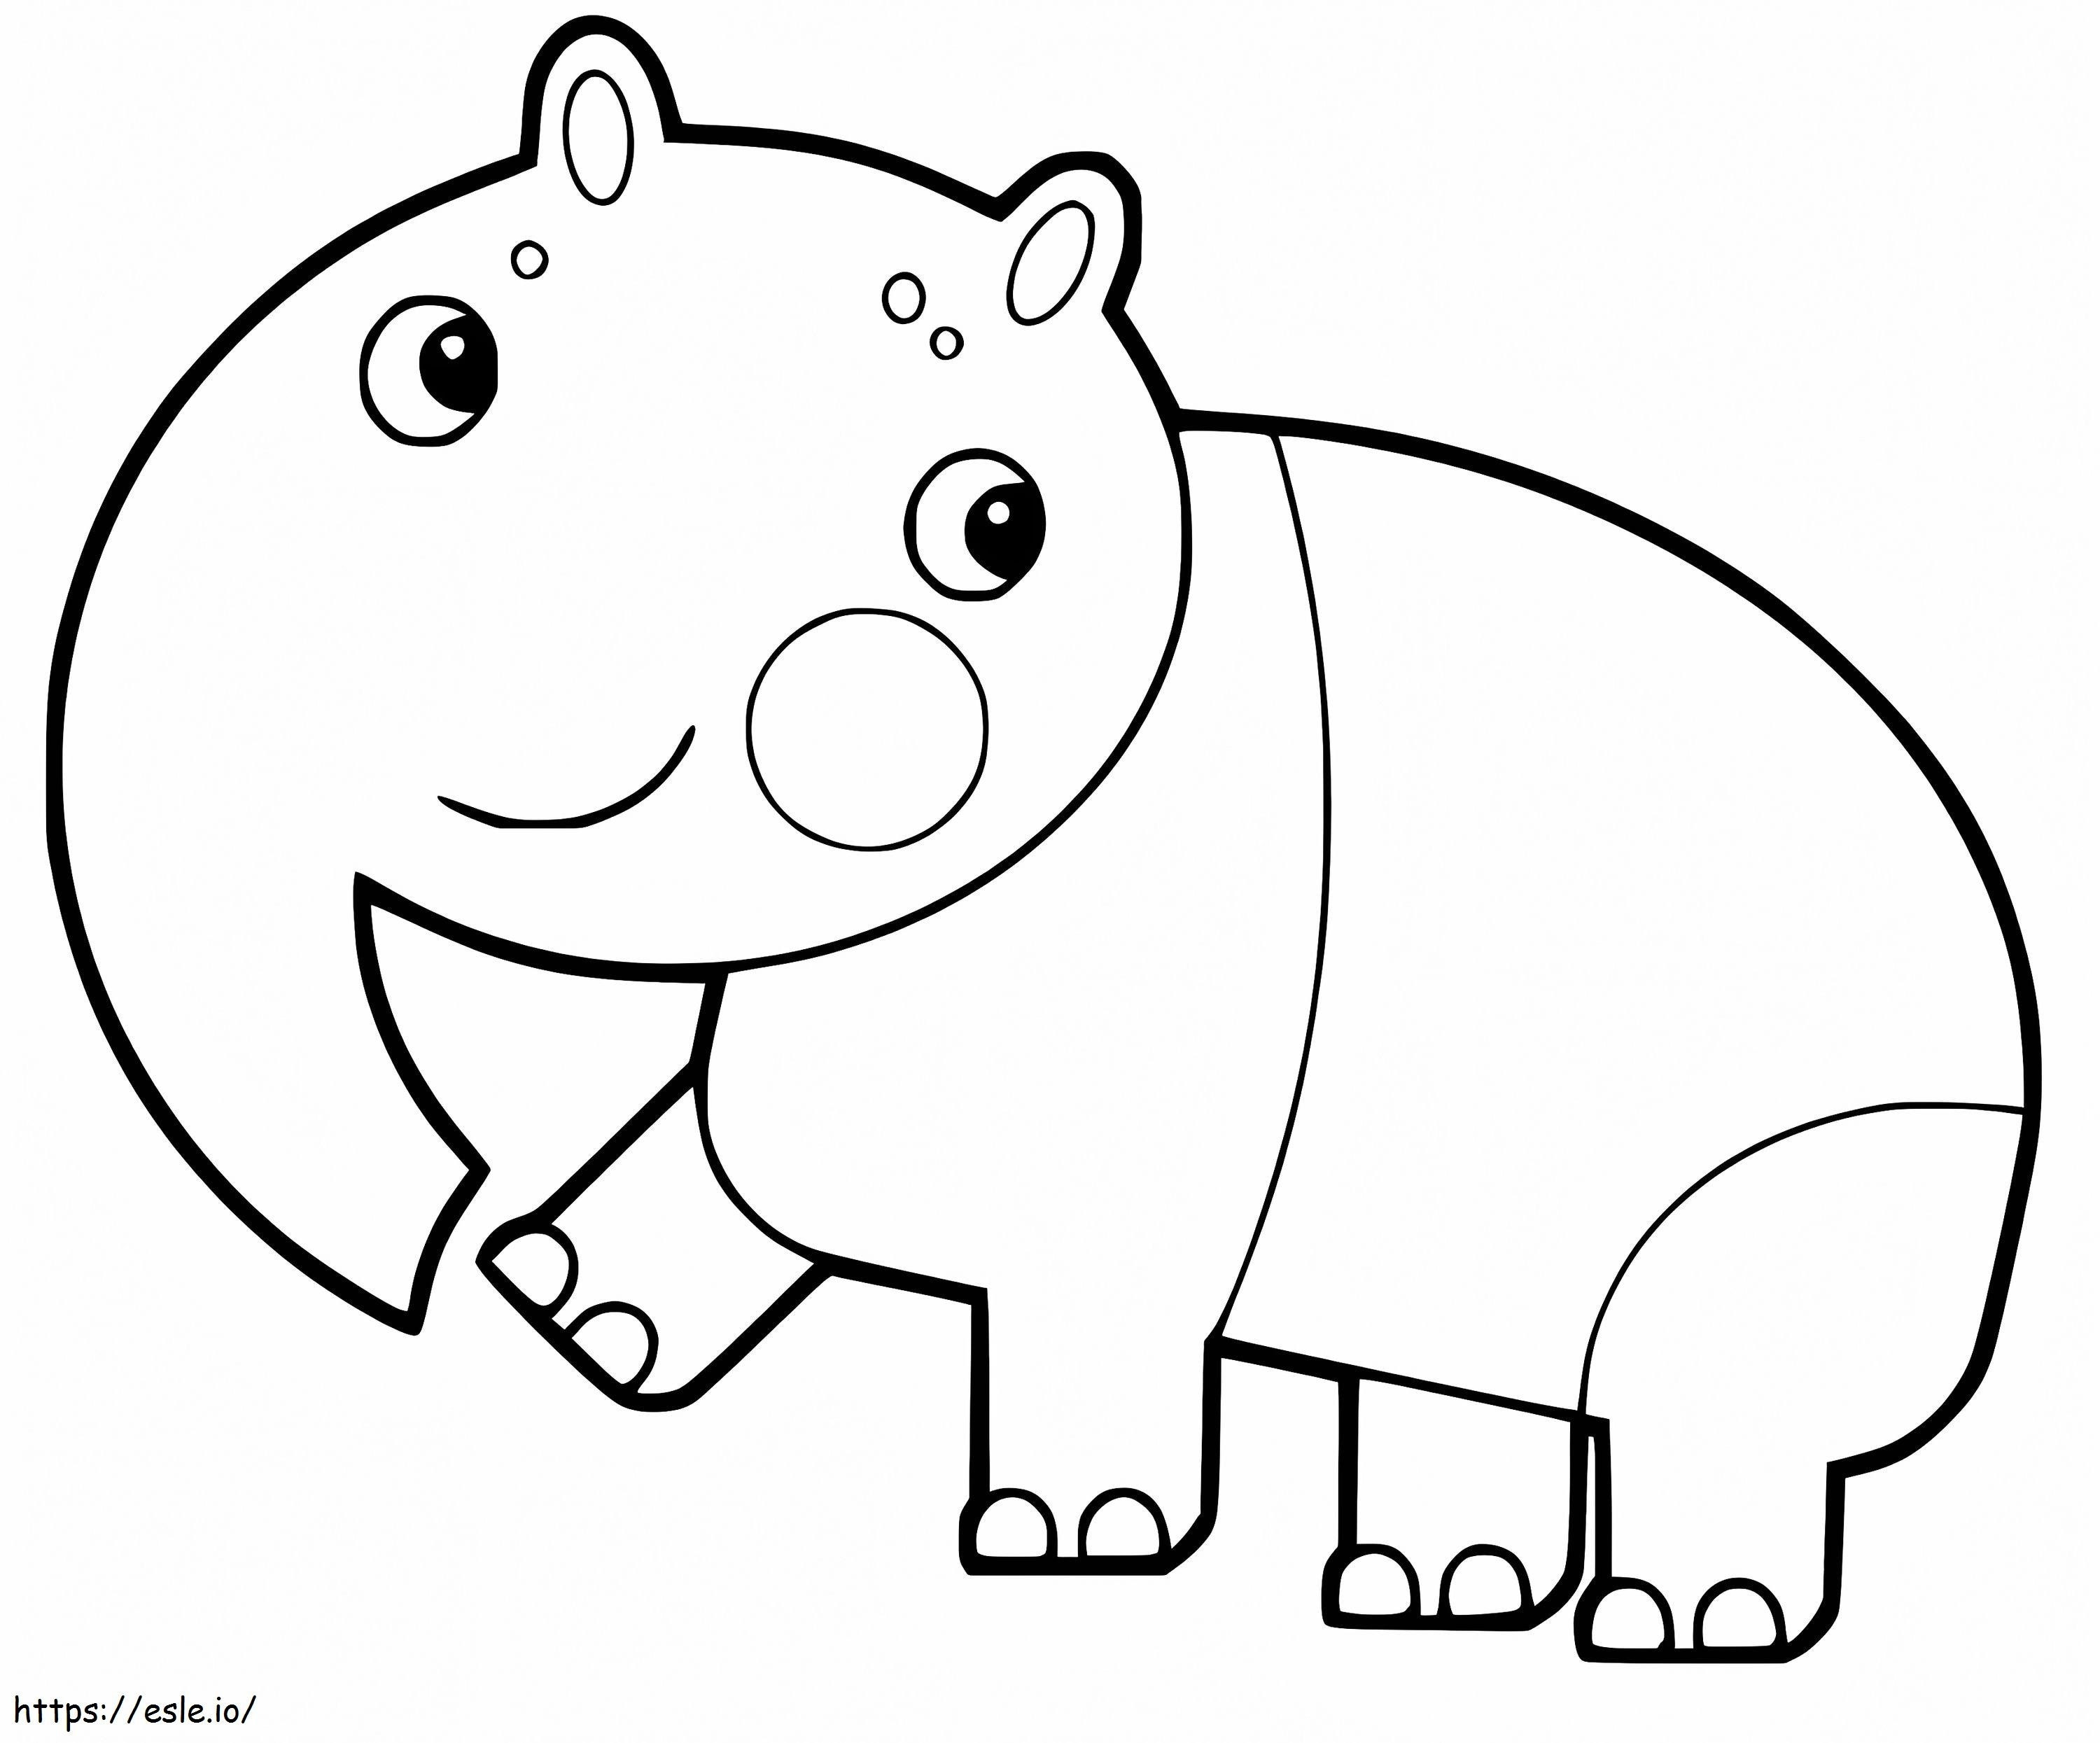 Cute Tapir coloring page